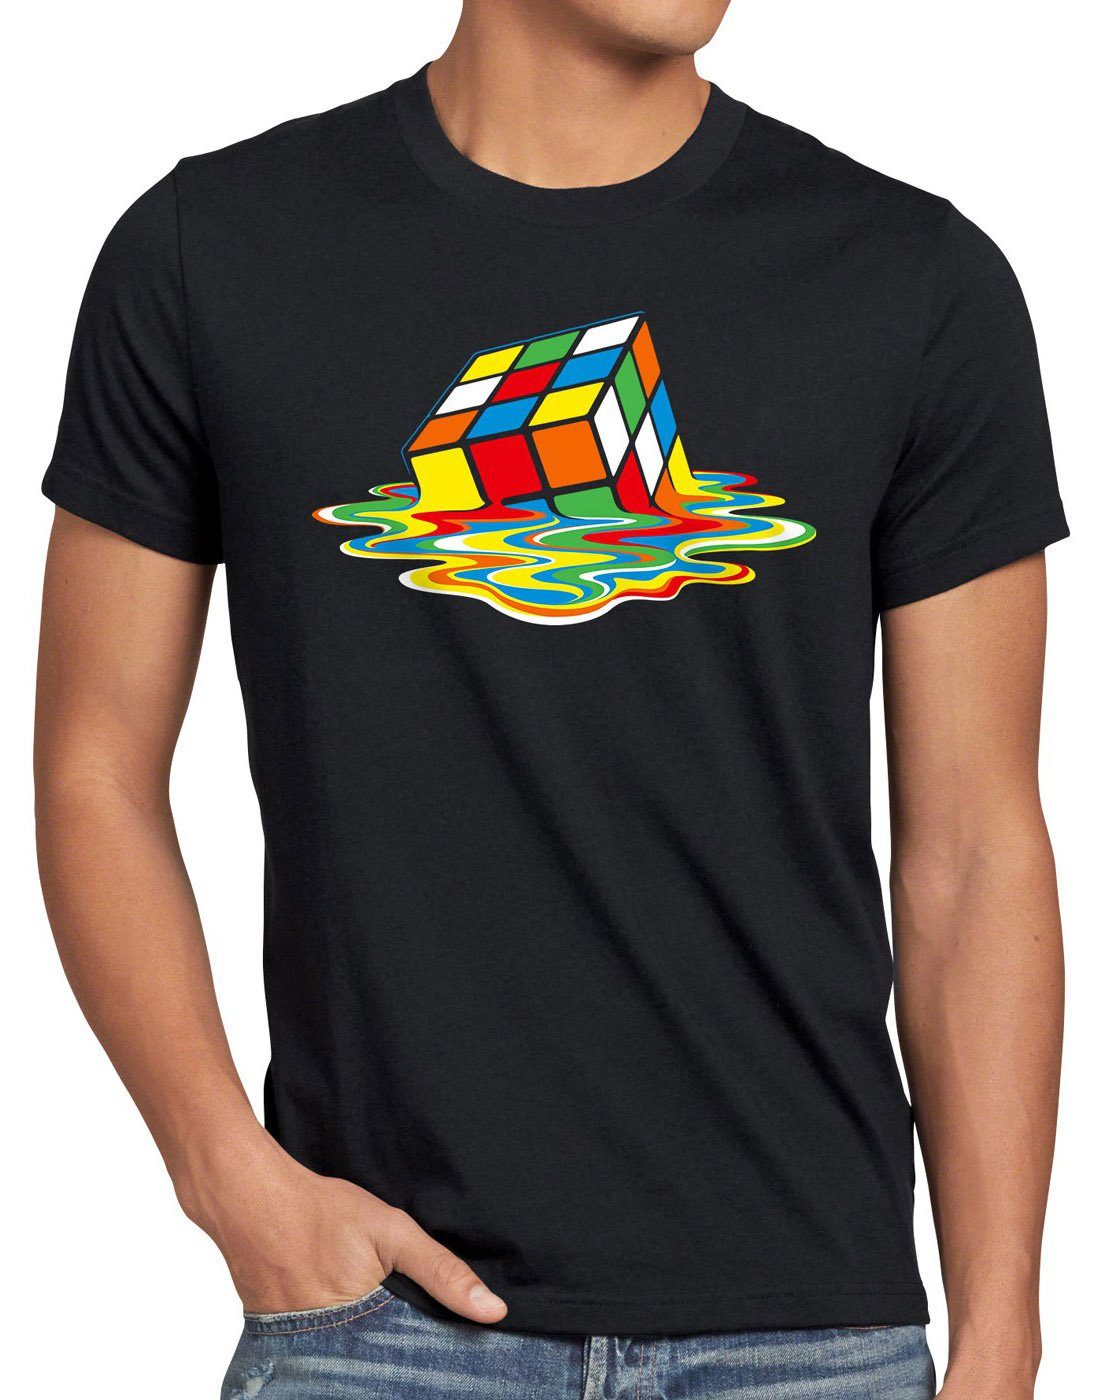 Zauberwürfel cube cooper big 80er Herren rätsel style3 Sheldon T-Shirt bang melting tv Print-Shirt